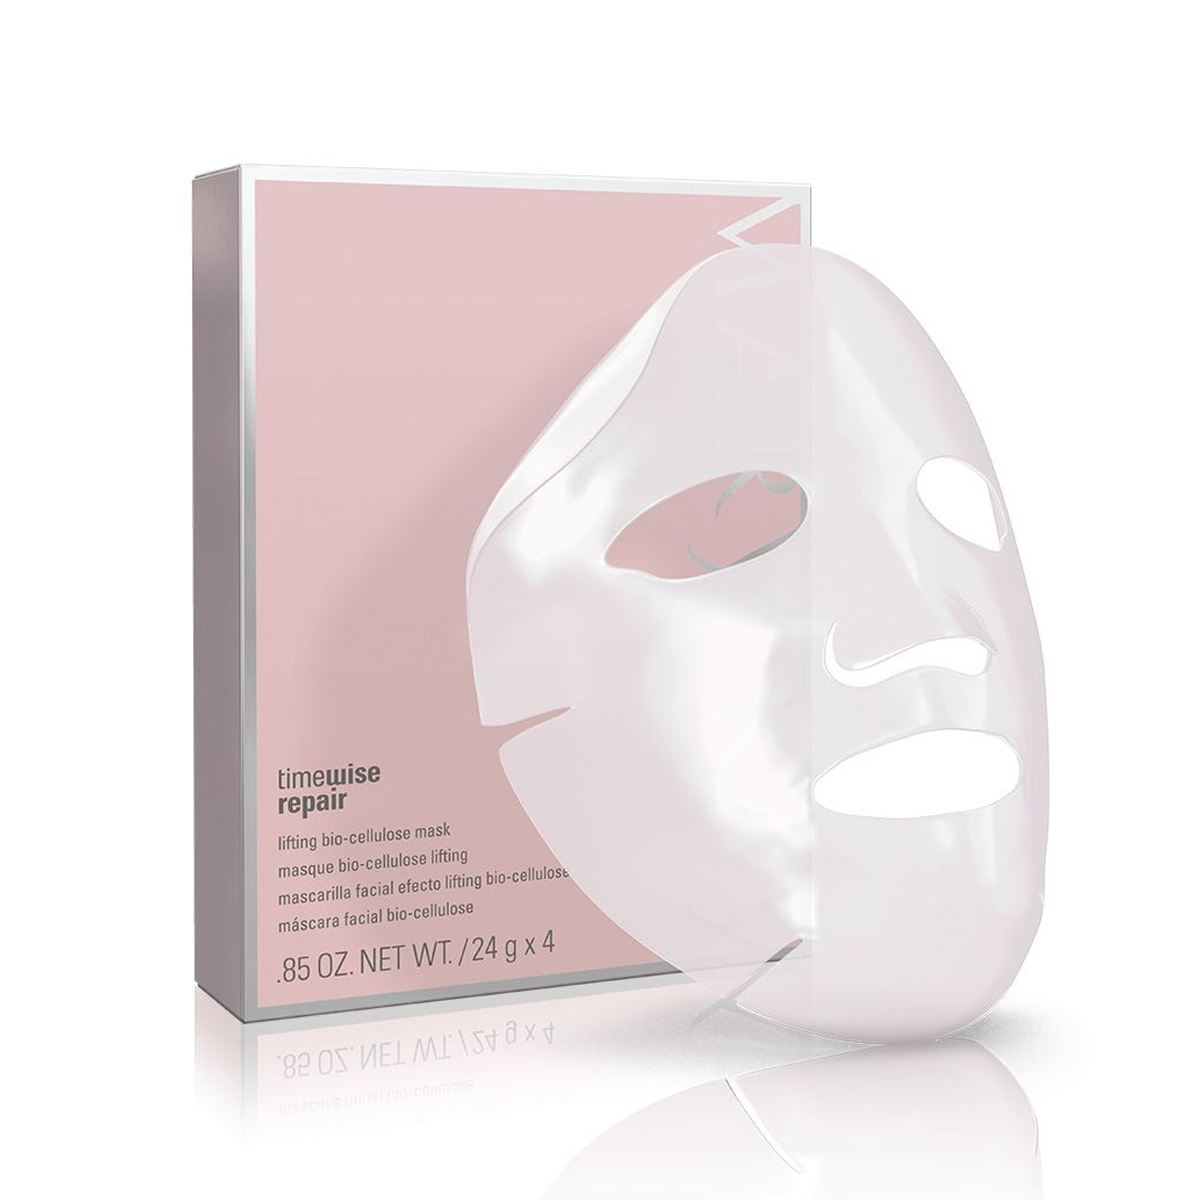 ماسک نقابی ضد چروک بایوسلولوز تایم وایز ریپیر~Lifting Bio Cellulose Mask Time Wise Repair~MARY KAY